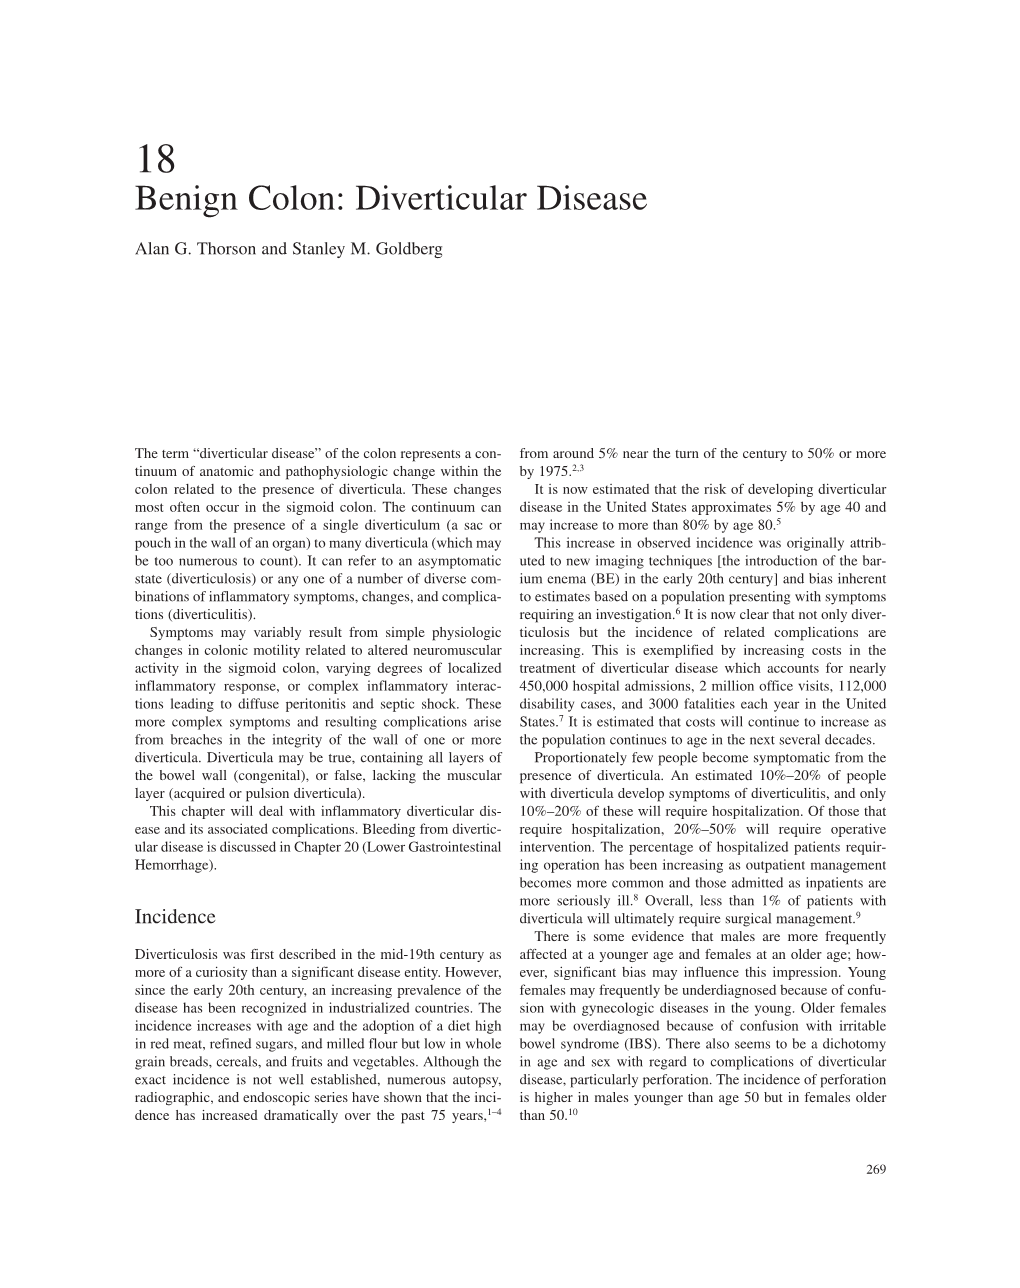 Benign Colon: Diverticular Disease